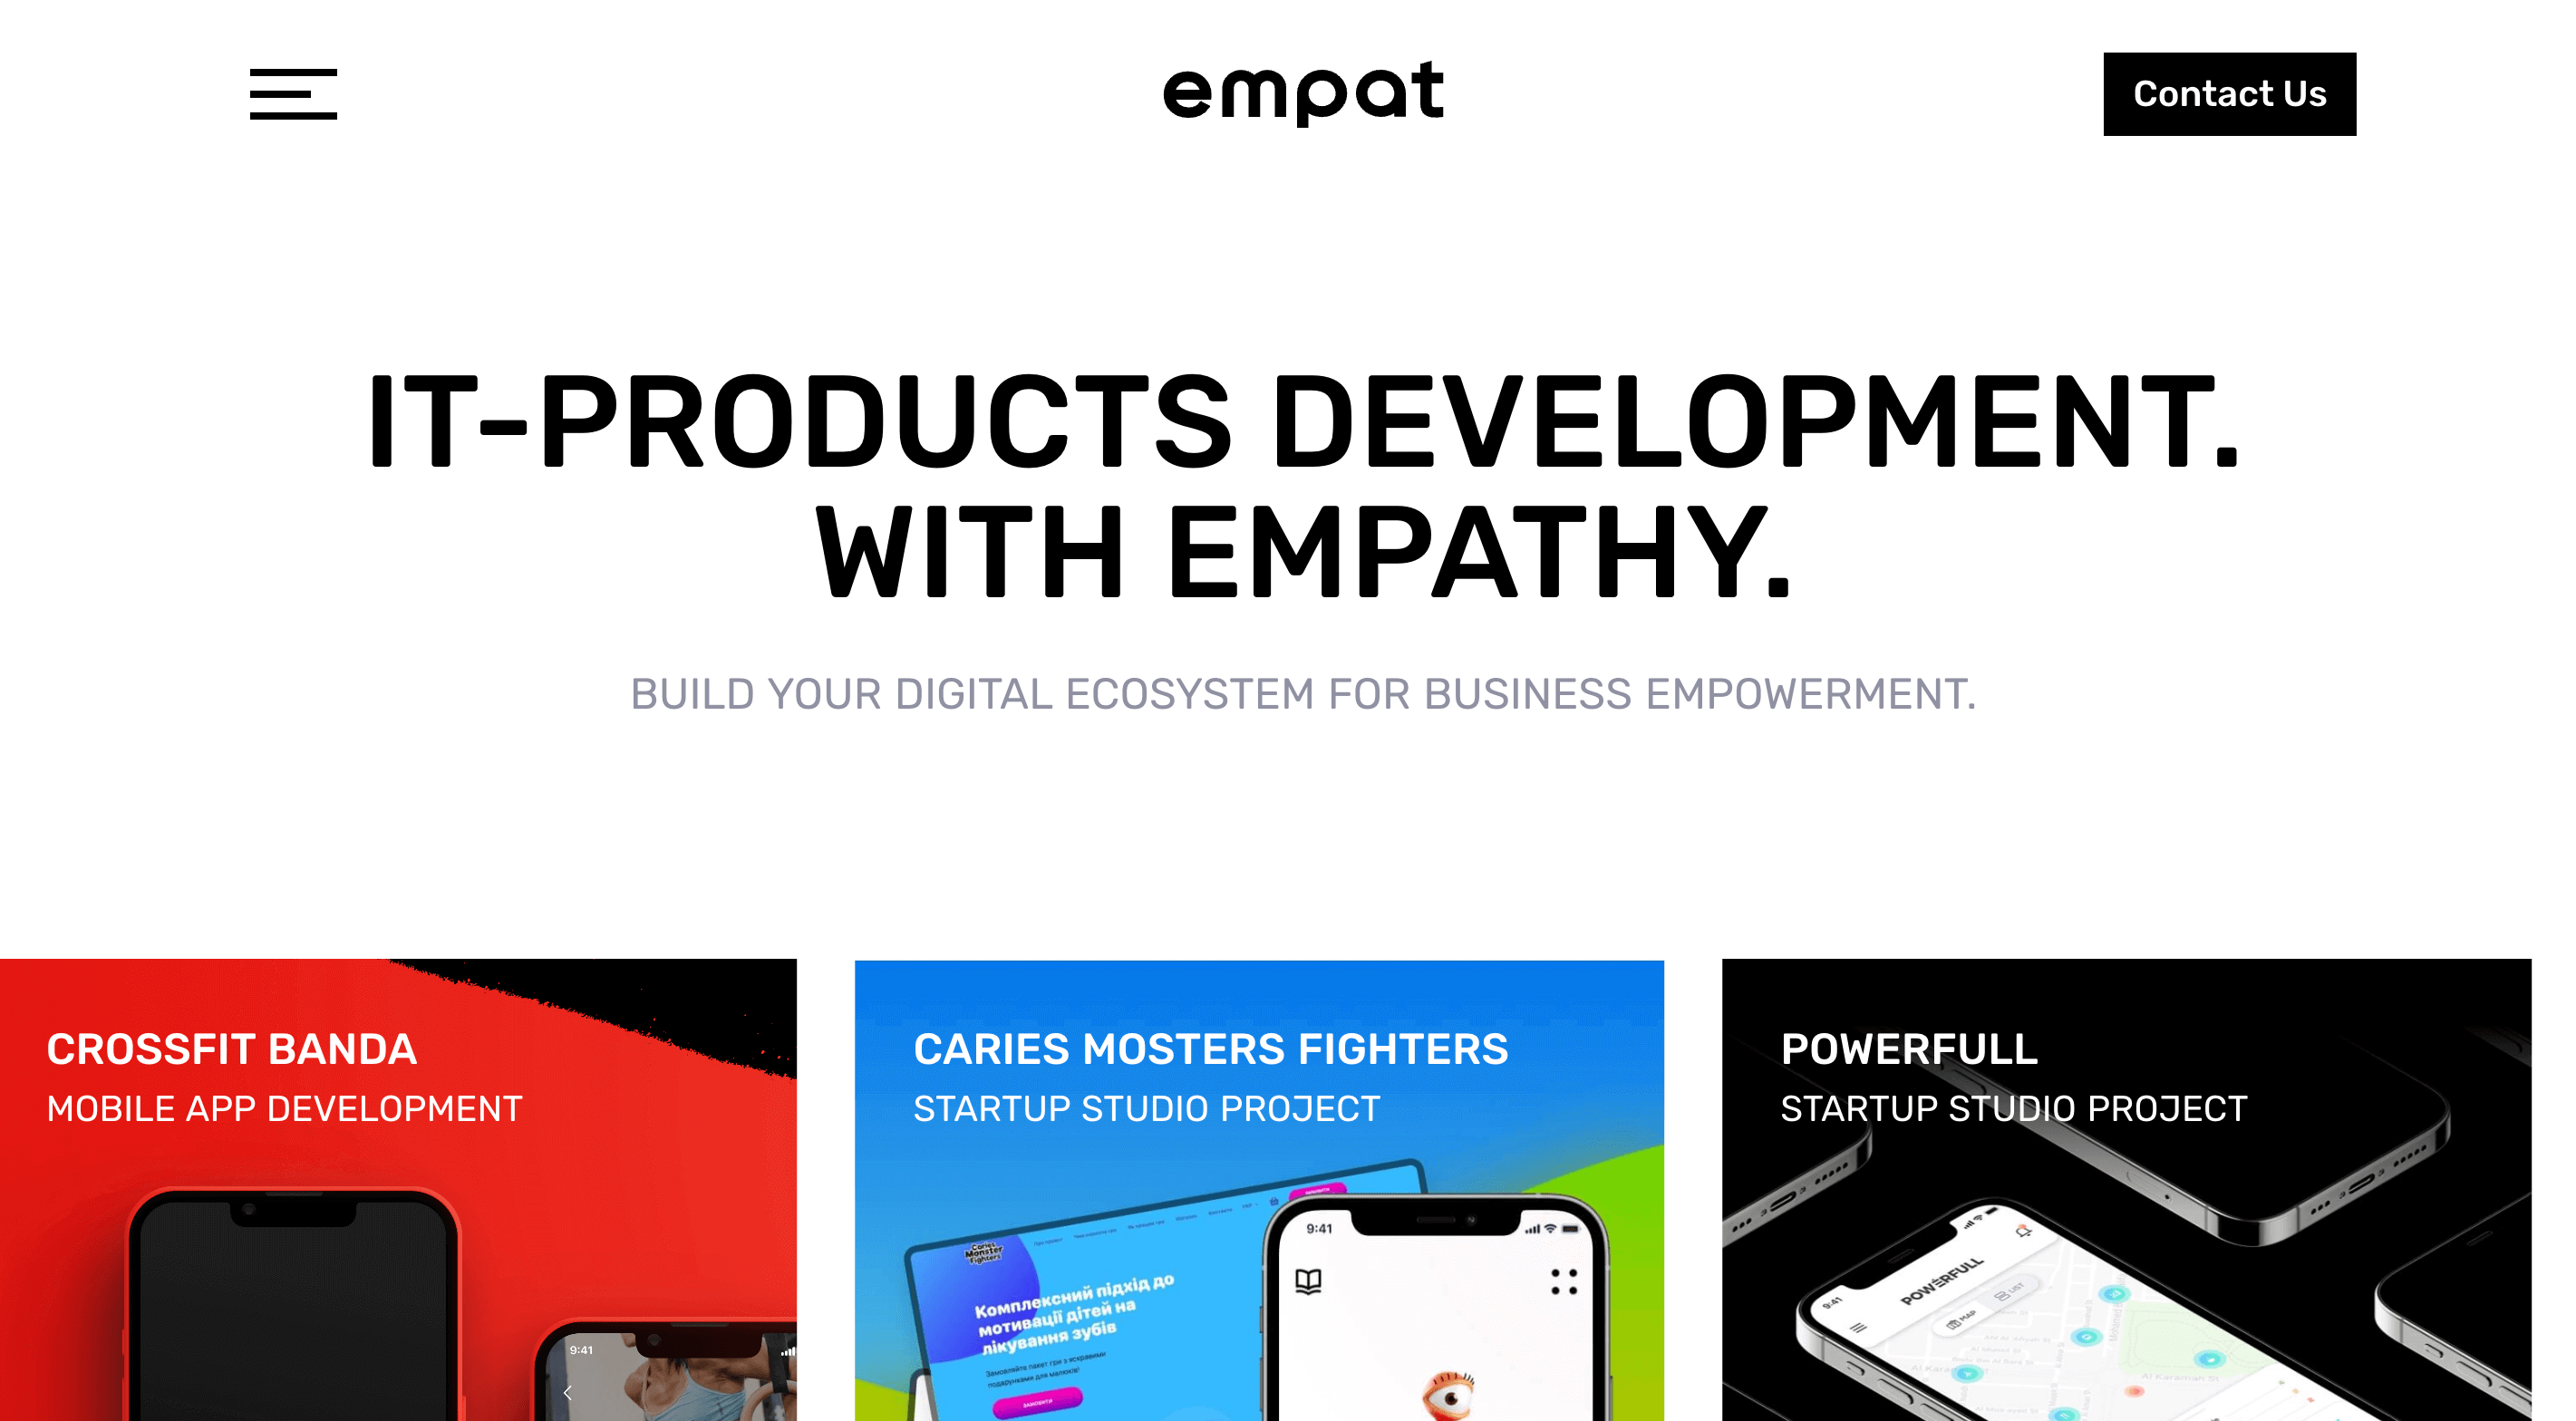 empat software development company in Ukraine